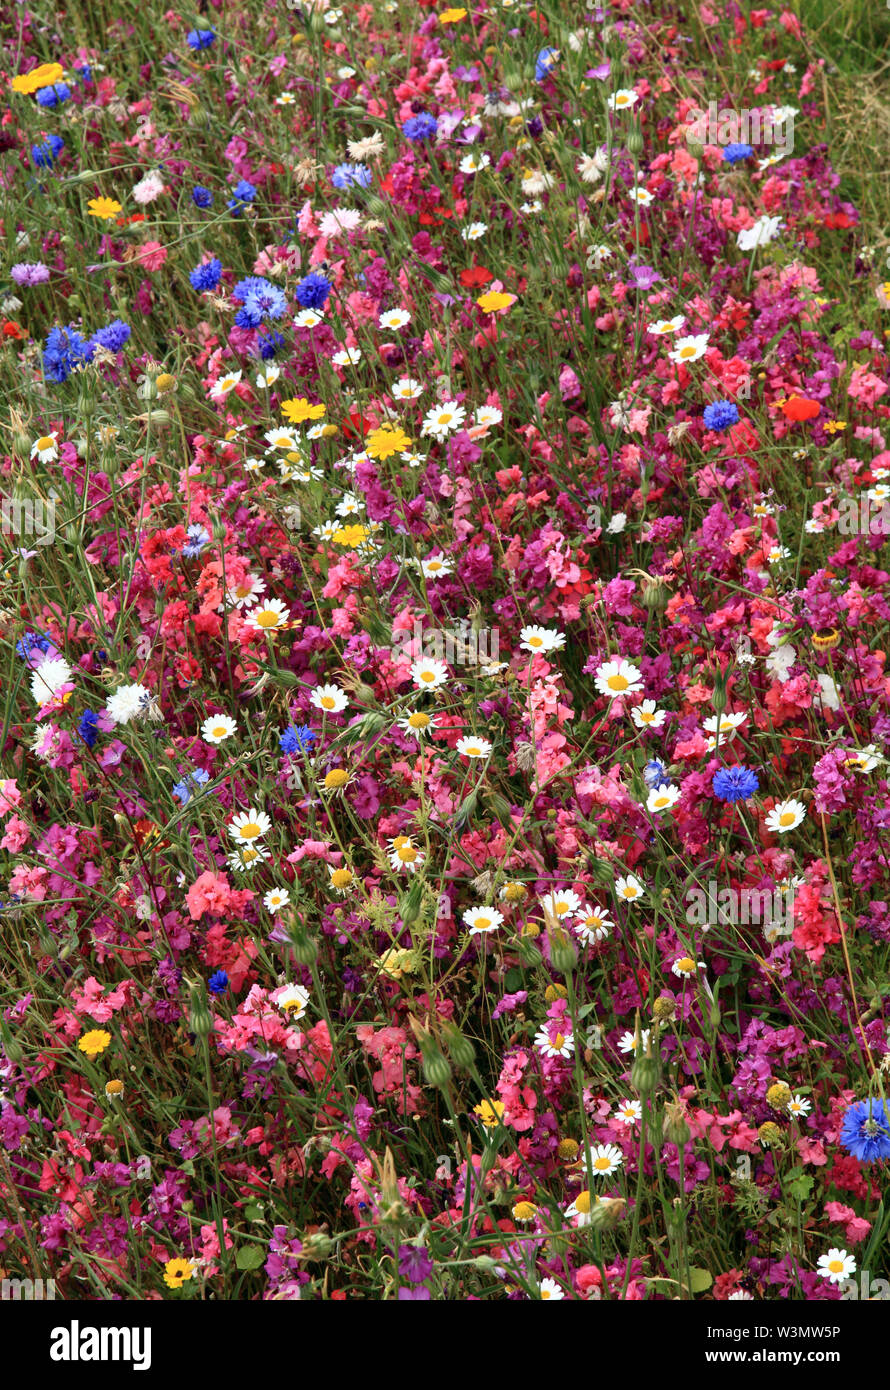 Wild Flower, garden, planting, flowers, cornflowers, daisies, wildflowers, colourful, border, mass planting Stock Photo